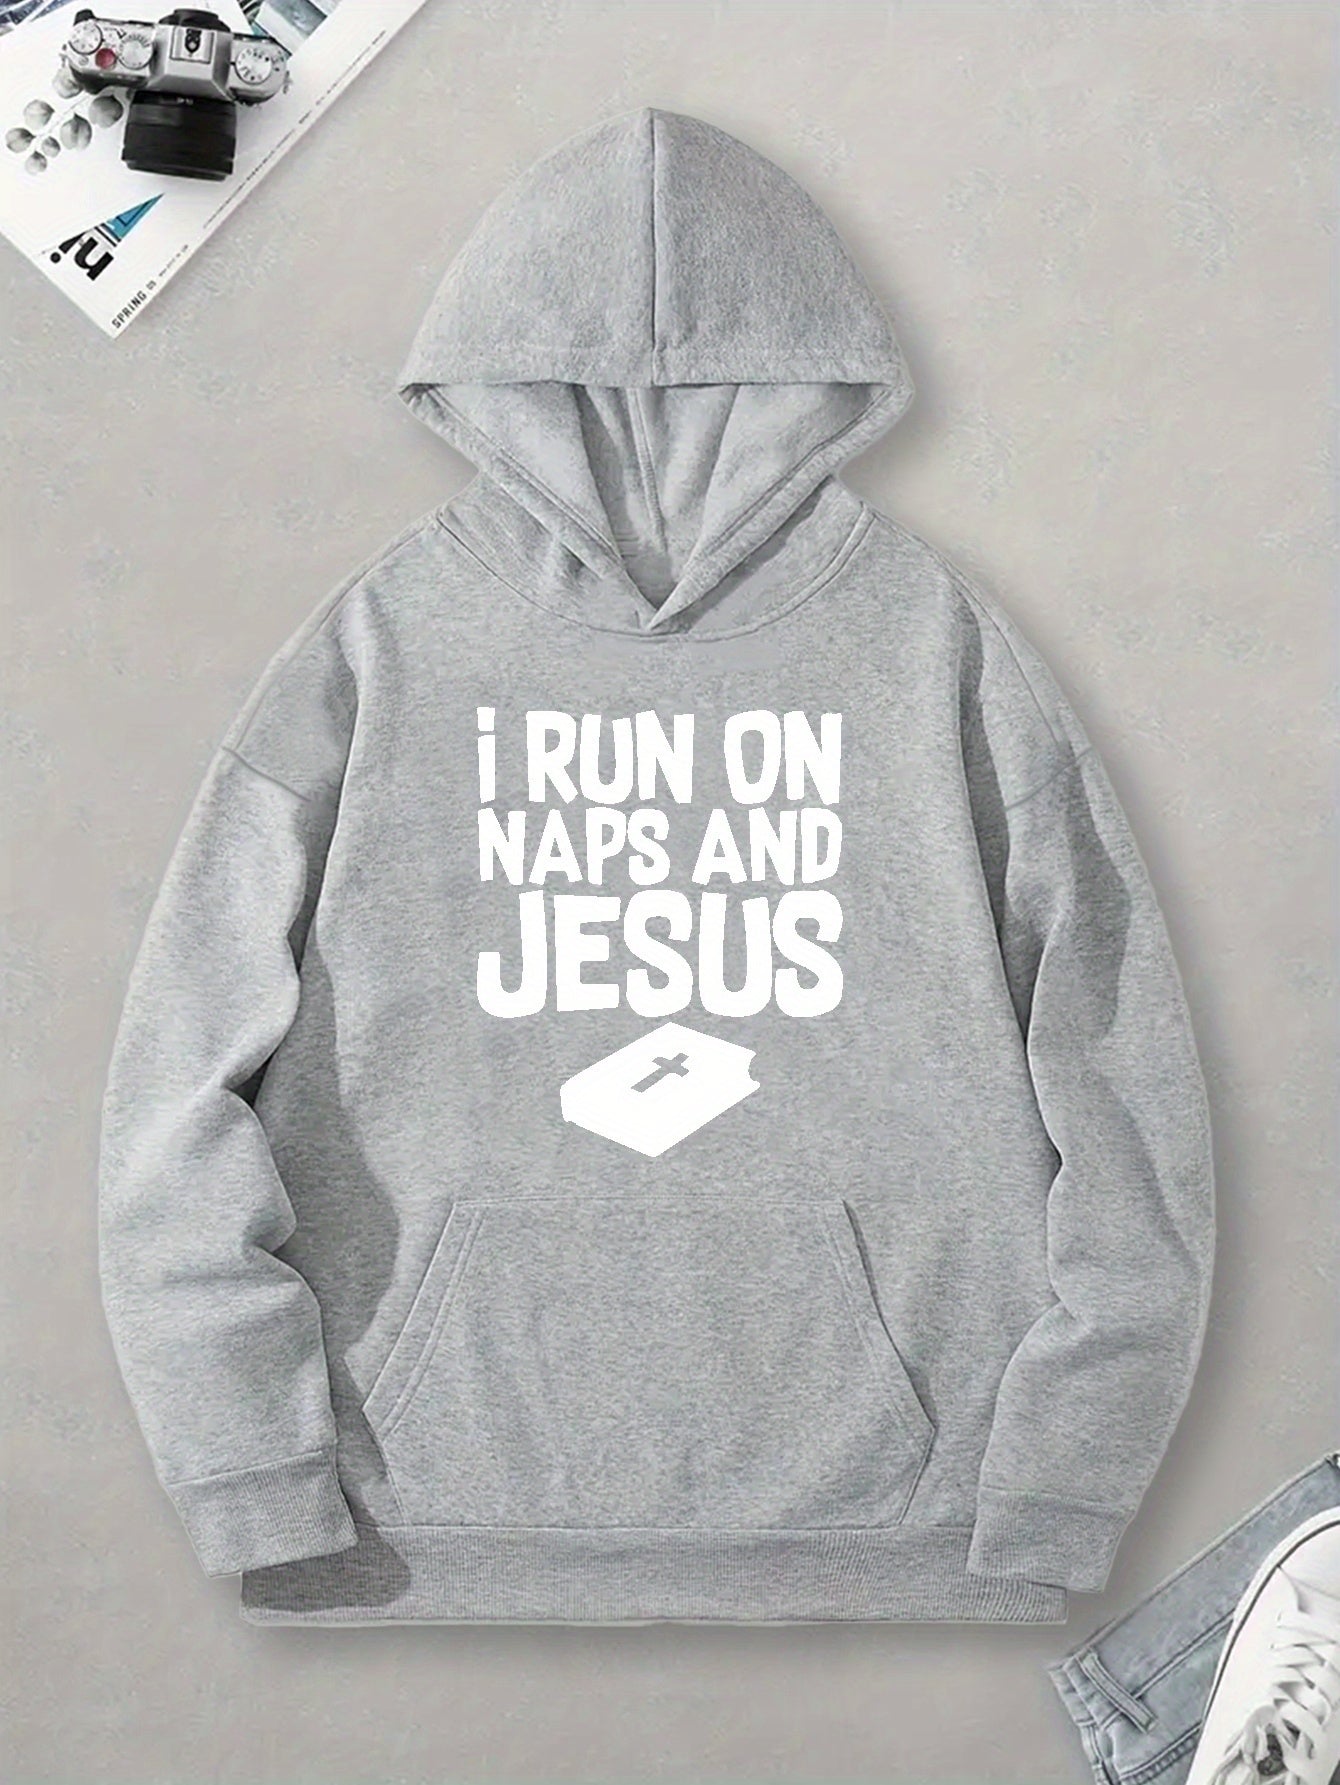 I RUN ON NAPS AND JESUS Men's Christian Pullover Hooded Sweatshirt claimedbygoddesigns